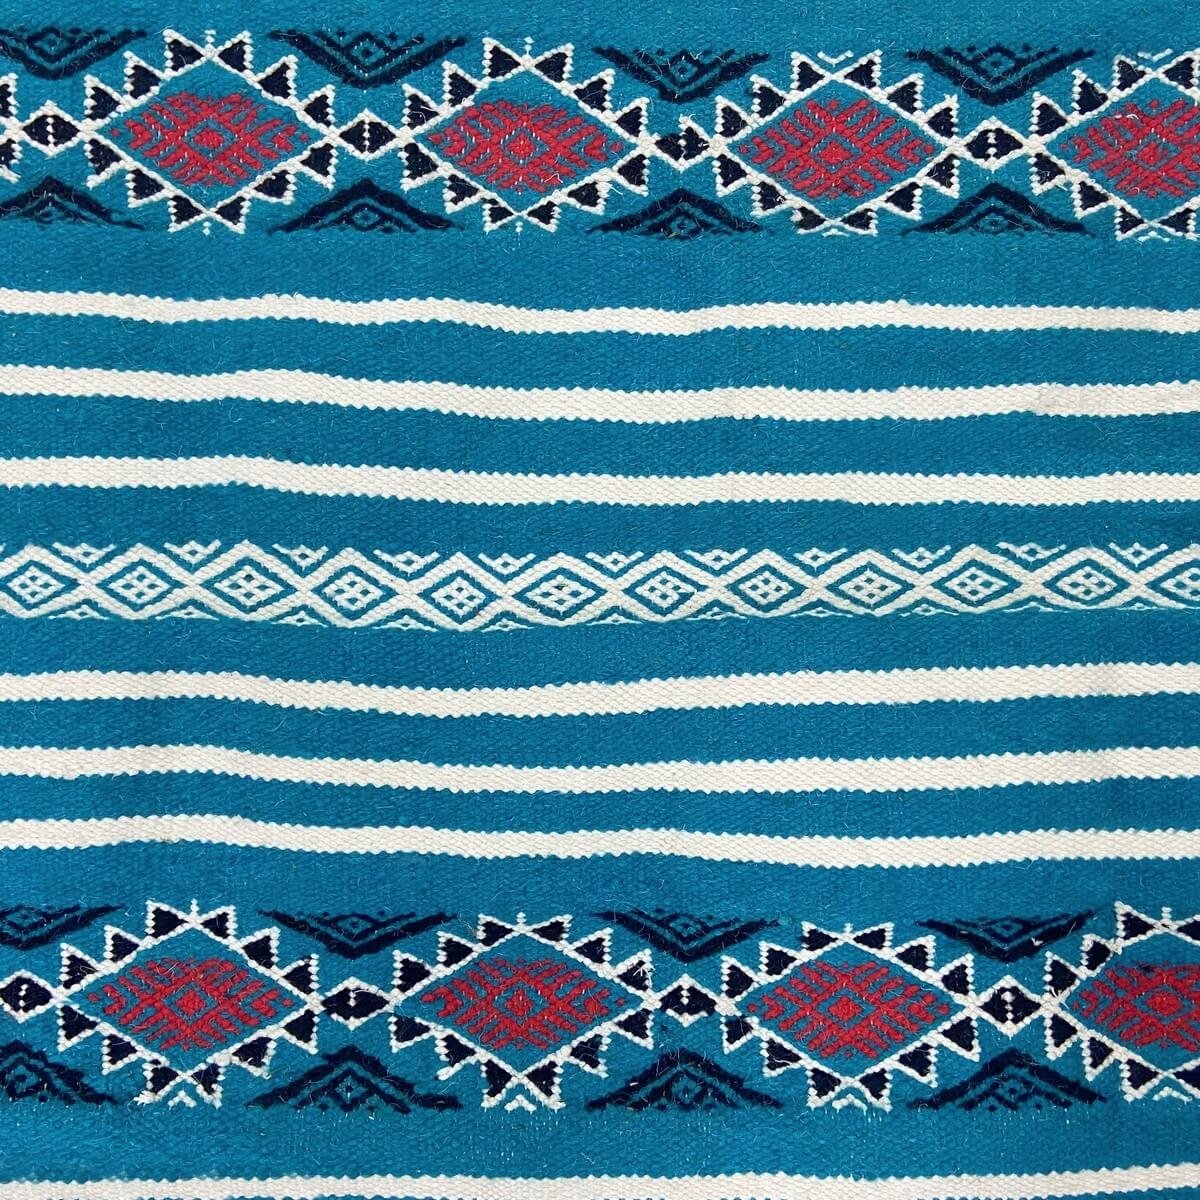 Berber tapijt Tapijt Kilim Emder 107x140 Turkoois/Jeel/Rood (Handgeweven, Wol, Tunesië) Tunesisch kilimdeken, Marokkaanse stijl.